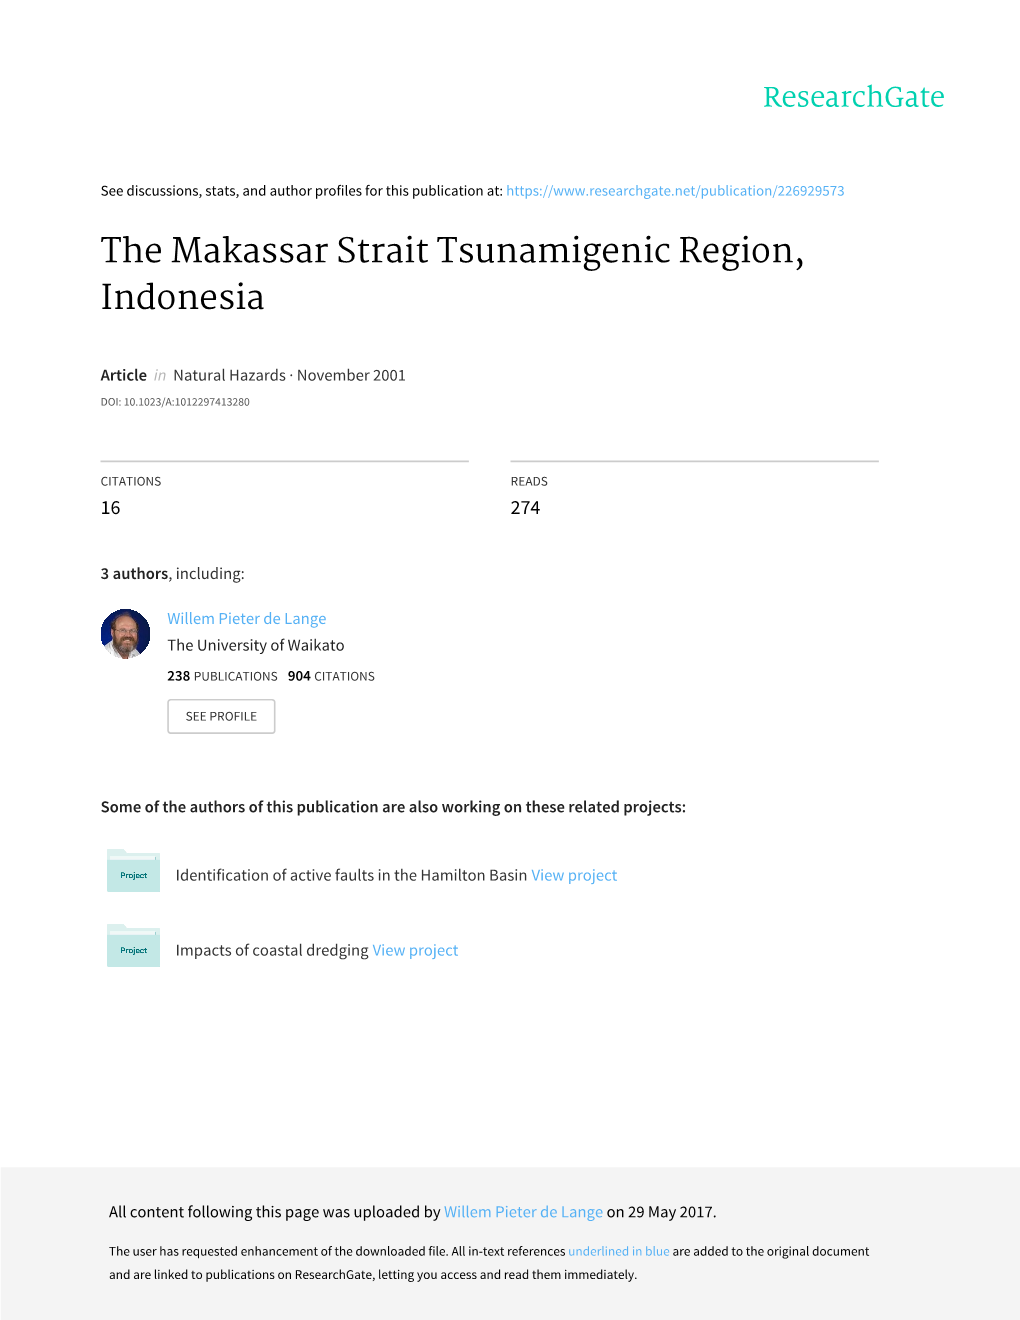 The Makassar Strait Tsunamigenic Region, Indonesia